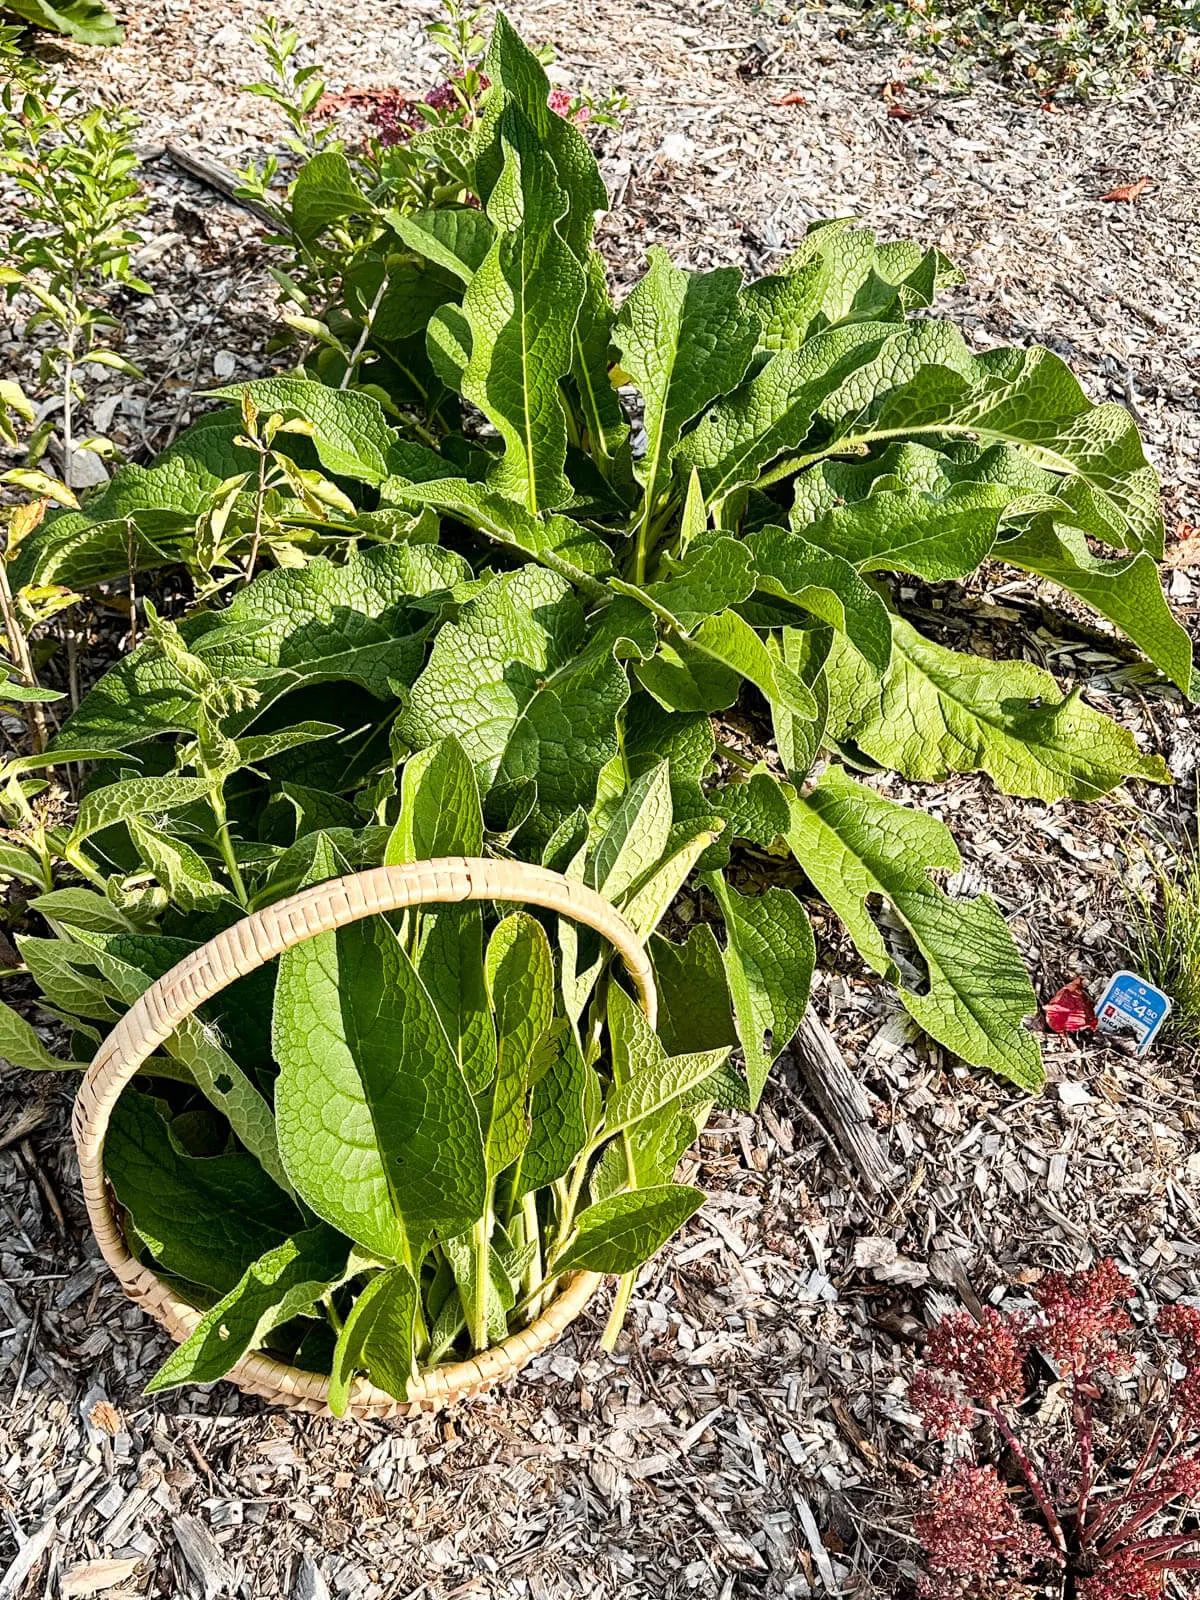 Basket of comfrey leaves near a large comfrey plant.